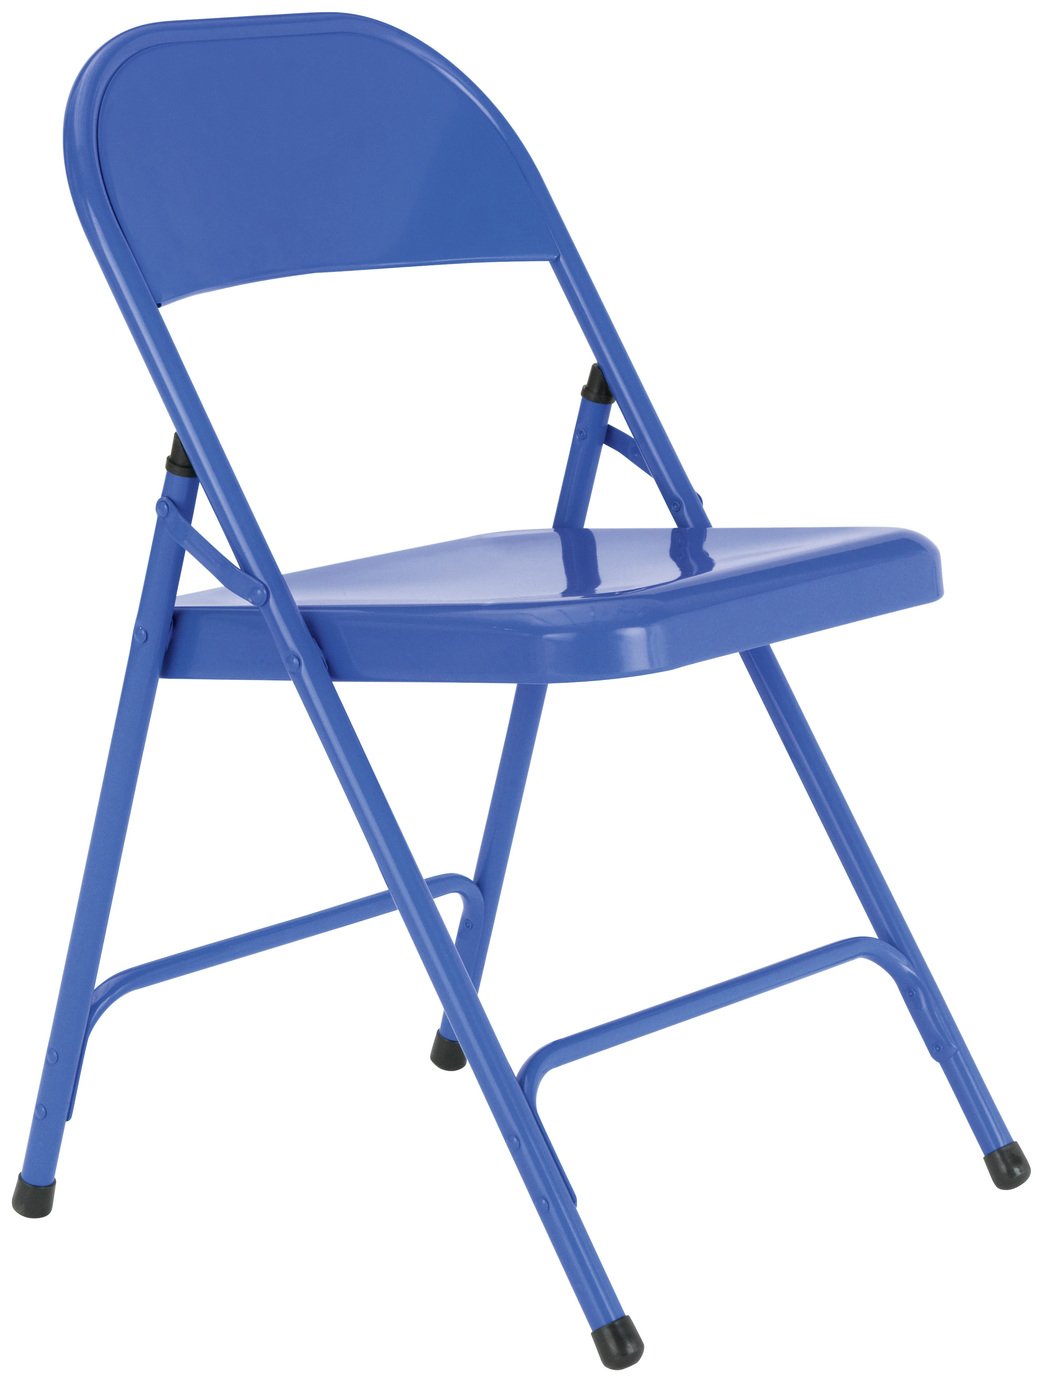 Habitat Macadam Metal Folding Chair - Cobalt